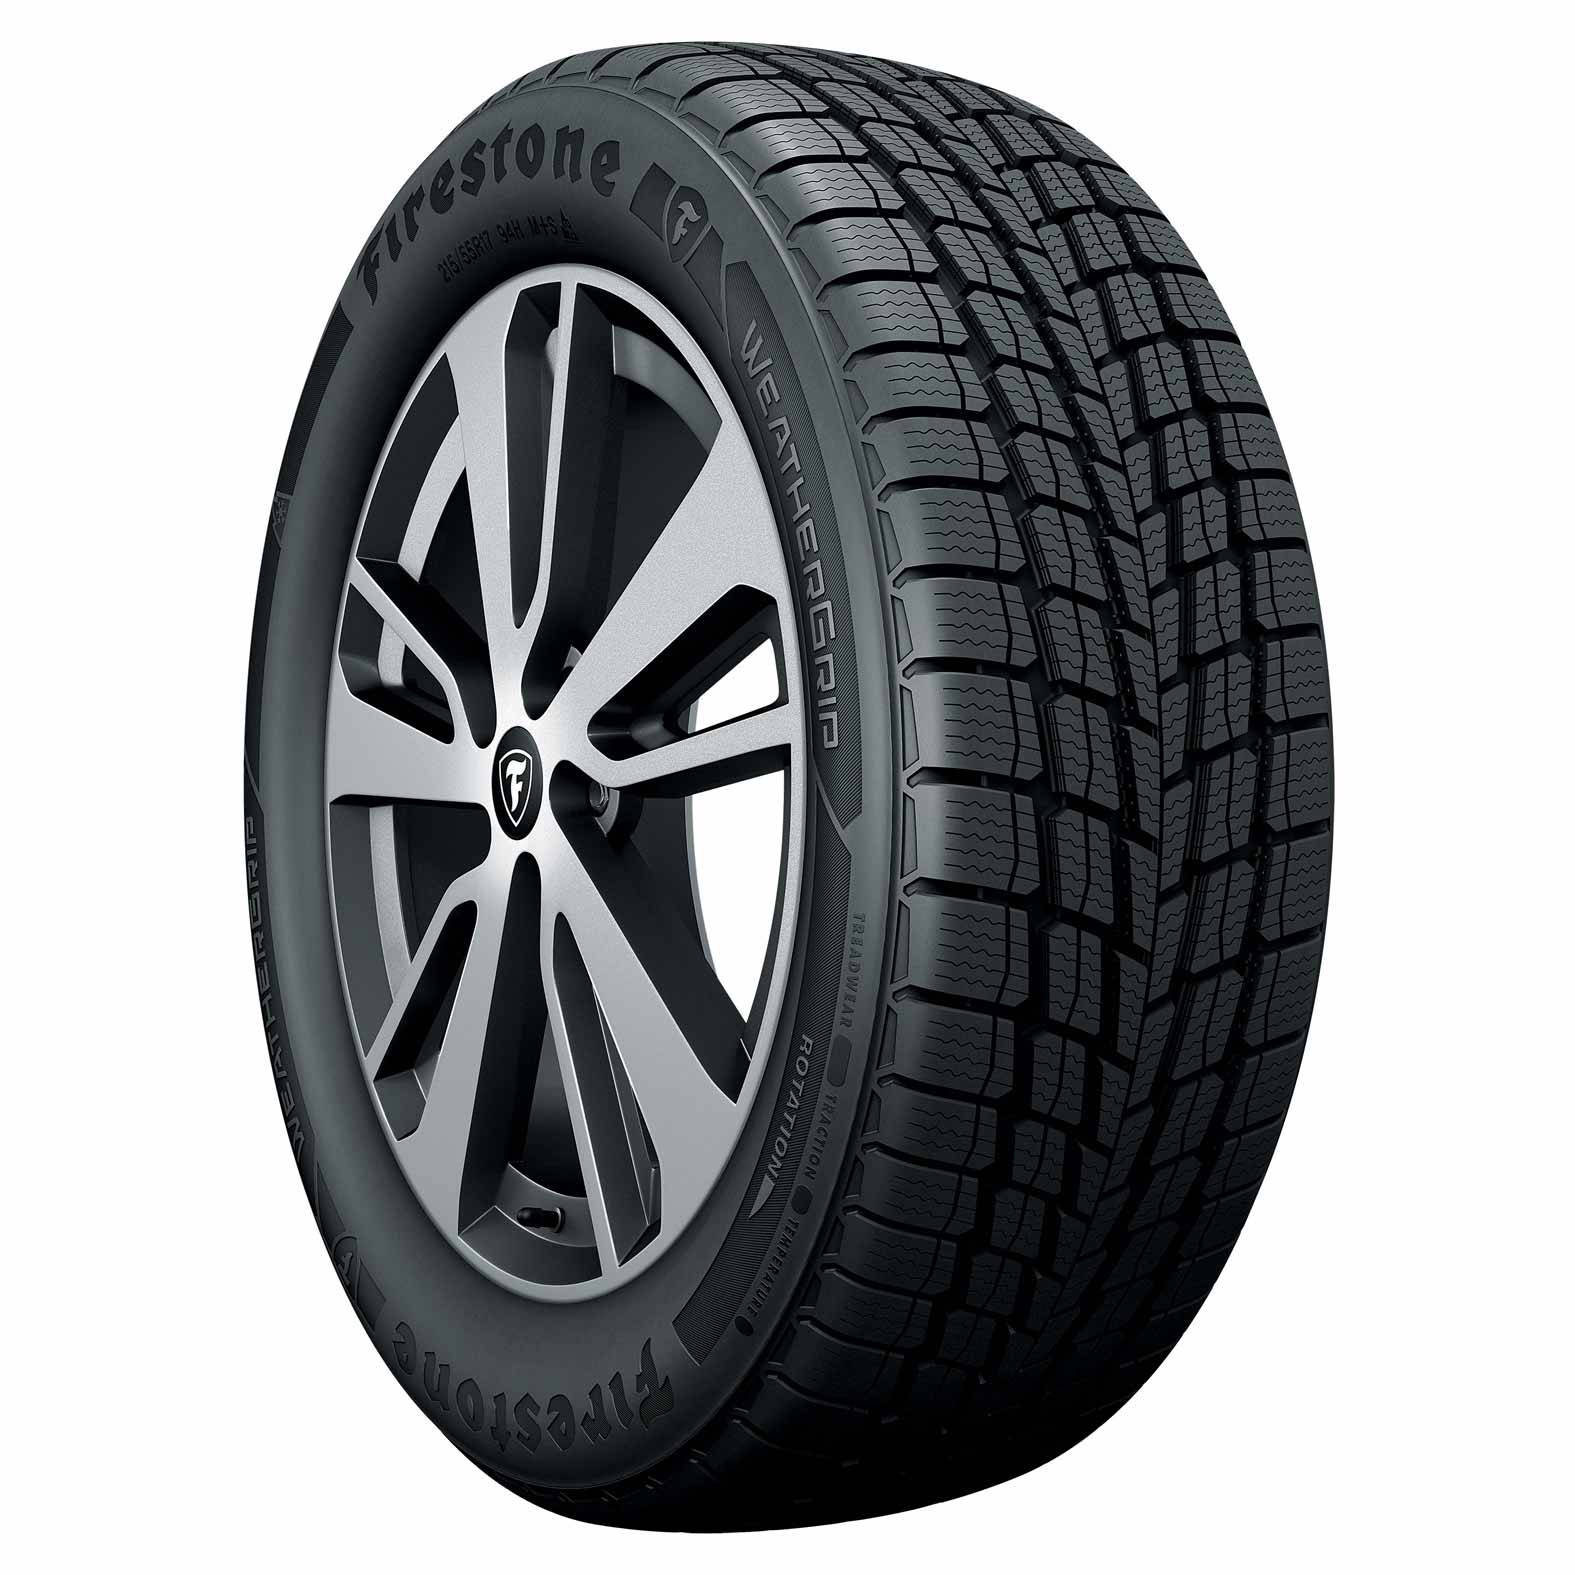 Firestone Black Tire Gray Hubcap Wallpaper